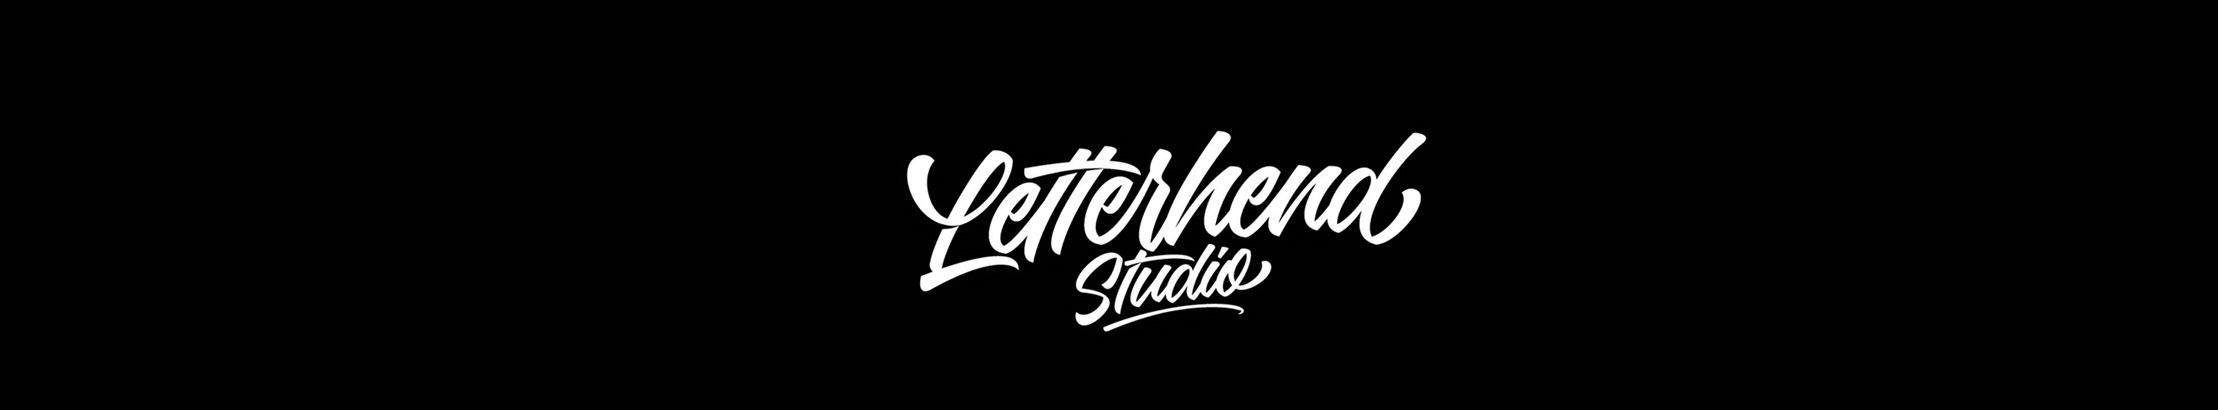 Letterhend Studio's profile banner